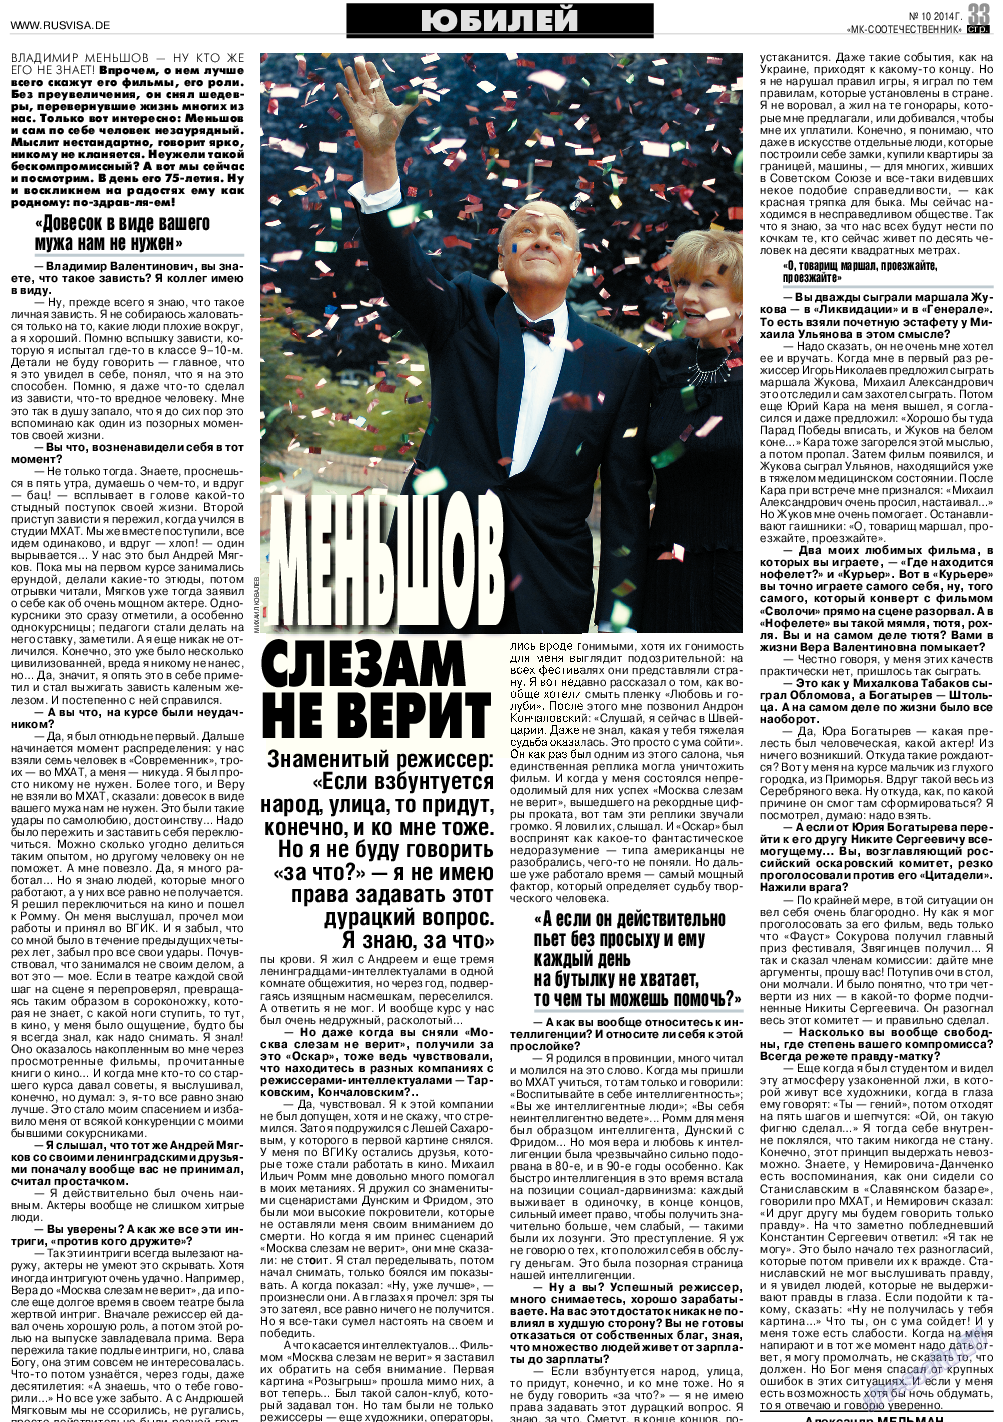 МК-Германия планета мнений, газета. 2014 №10 стр.33